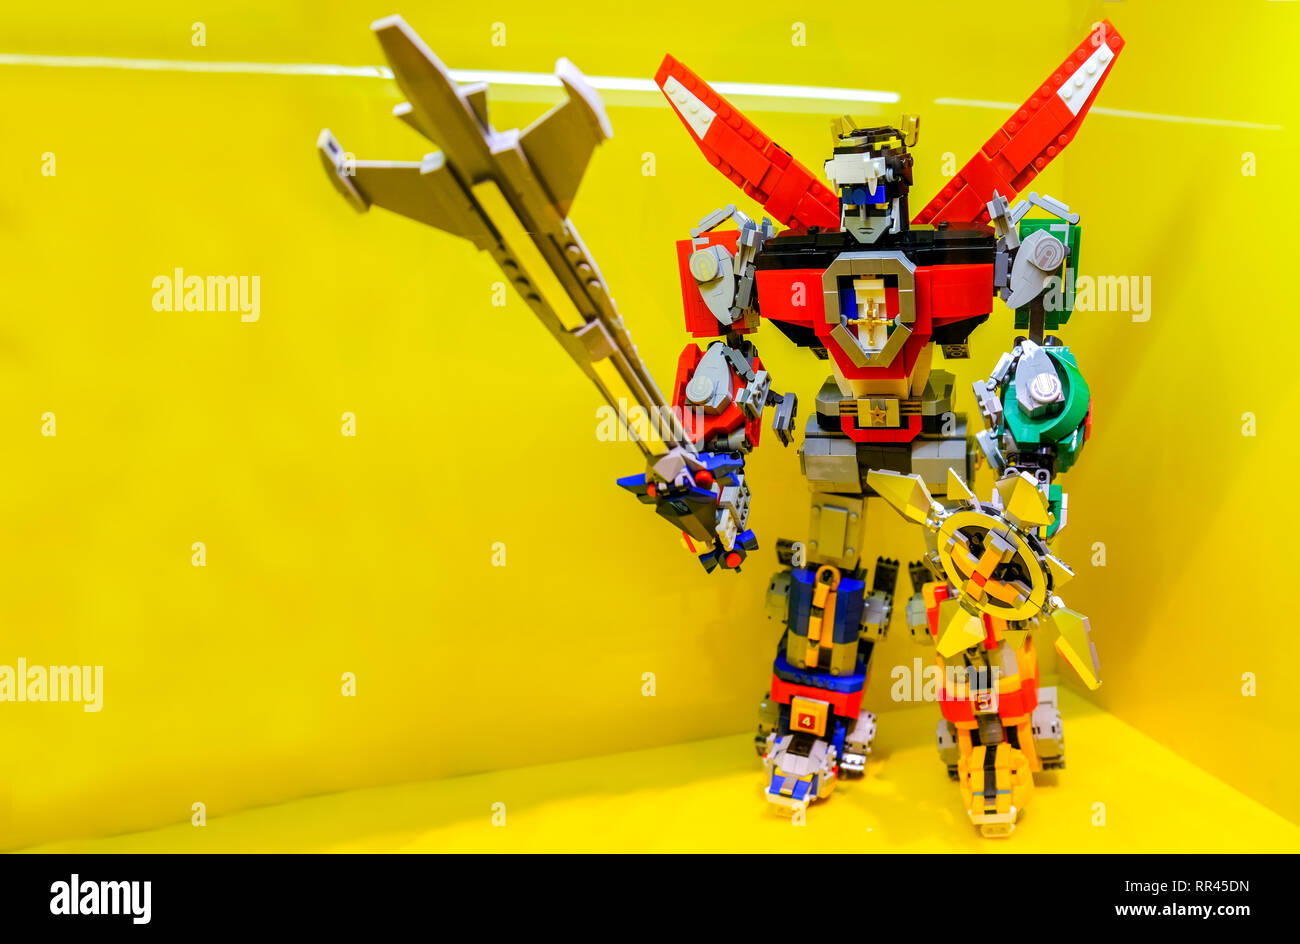 Voltron action figure made of Lego bricks Stock Photo